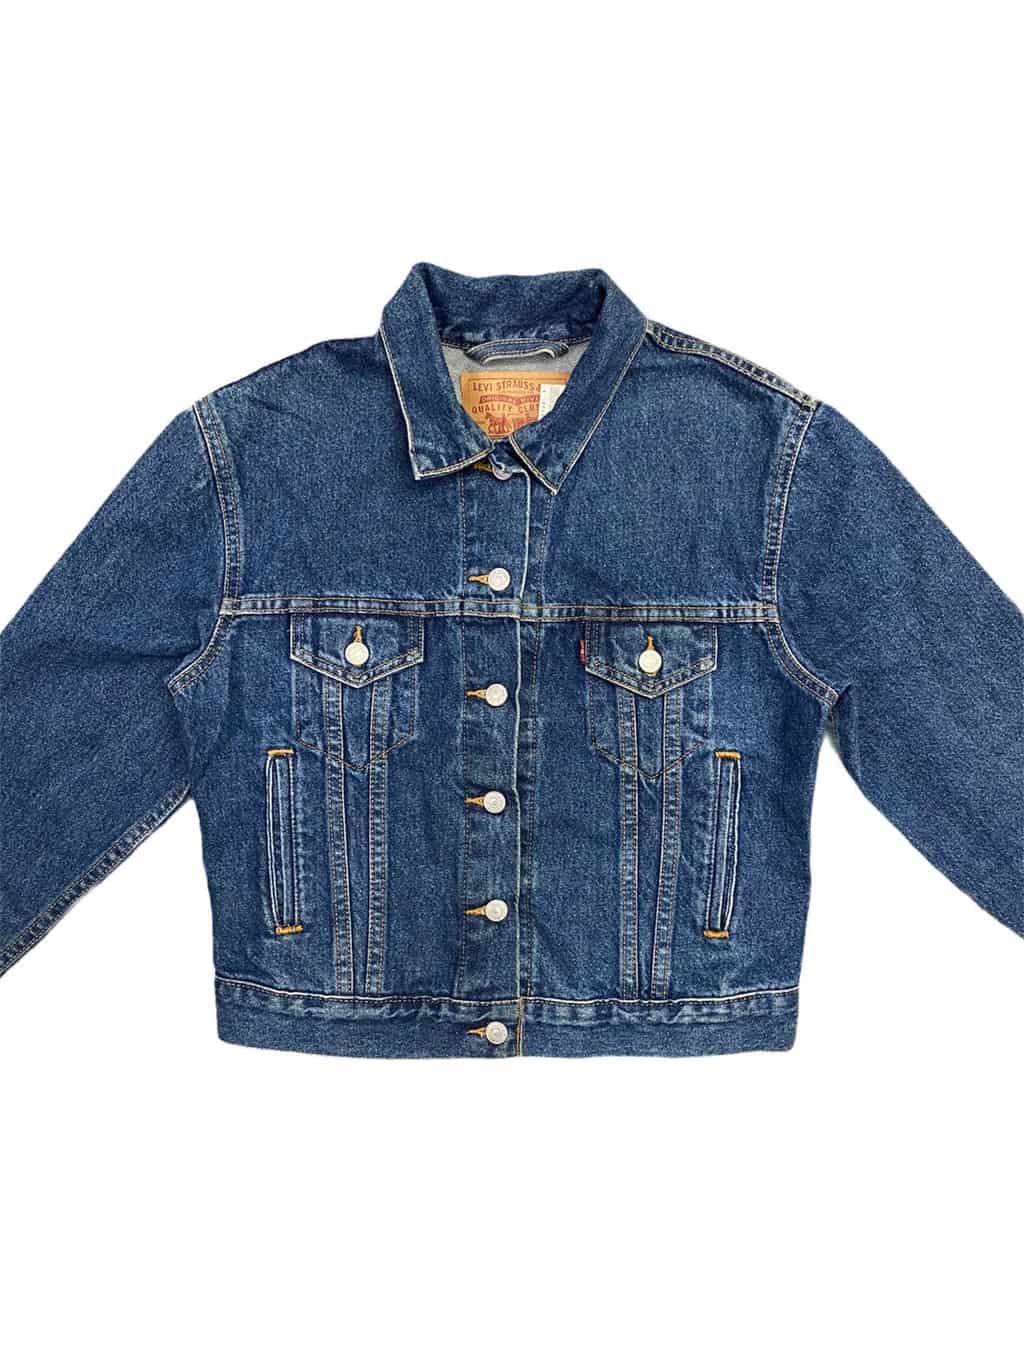 Vintage Levis Denim Jacket, Navy Acid Wash Jean Jacket Large Mens Womens  80s 90s Grunge USA Levi Jacket, Work Wear Truckerjacket - Etsy Israel